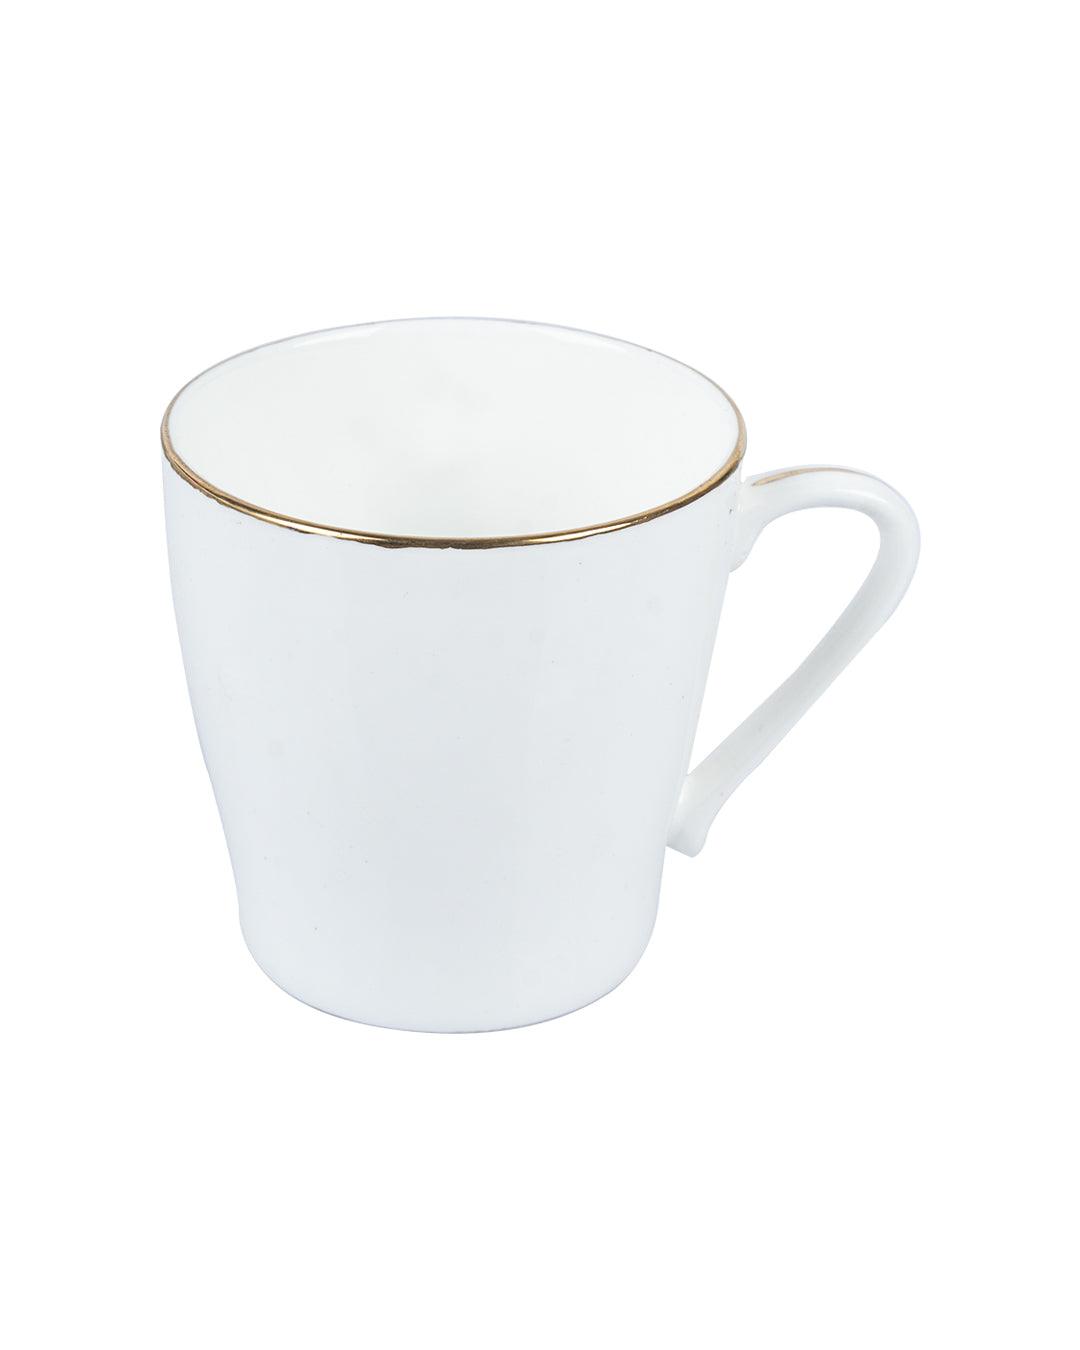 'VIENNESE WALTZ DANCER' Print Tea & Coffee Mugs in Ceramic ( White & Pink, Set Of 6, Each 200 mL) - MARKET 99